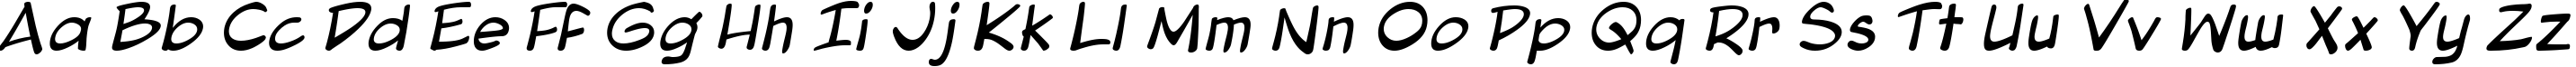 Пример написания английского алфавита шрифтом Blambot Pro Lite Italic